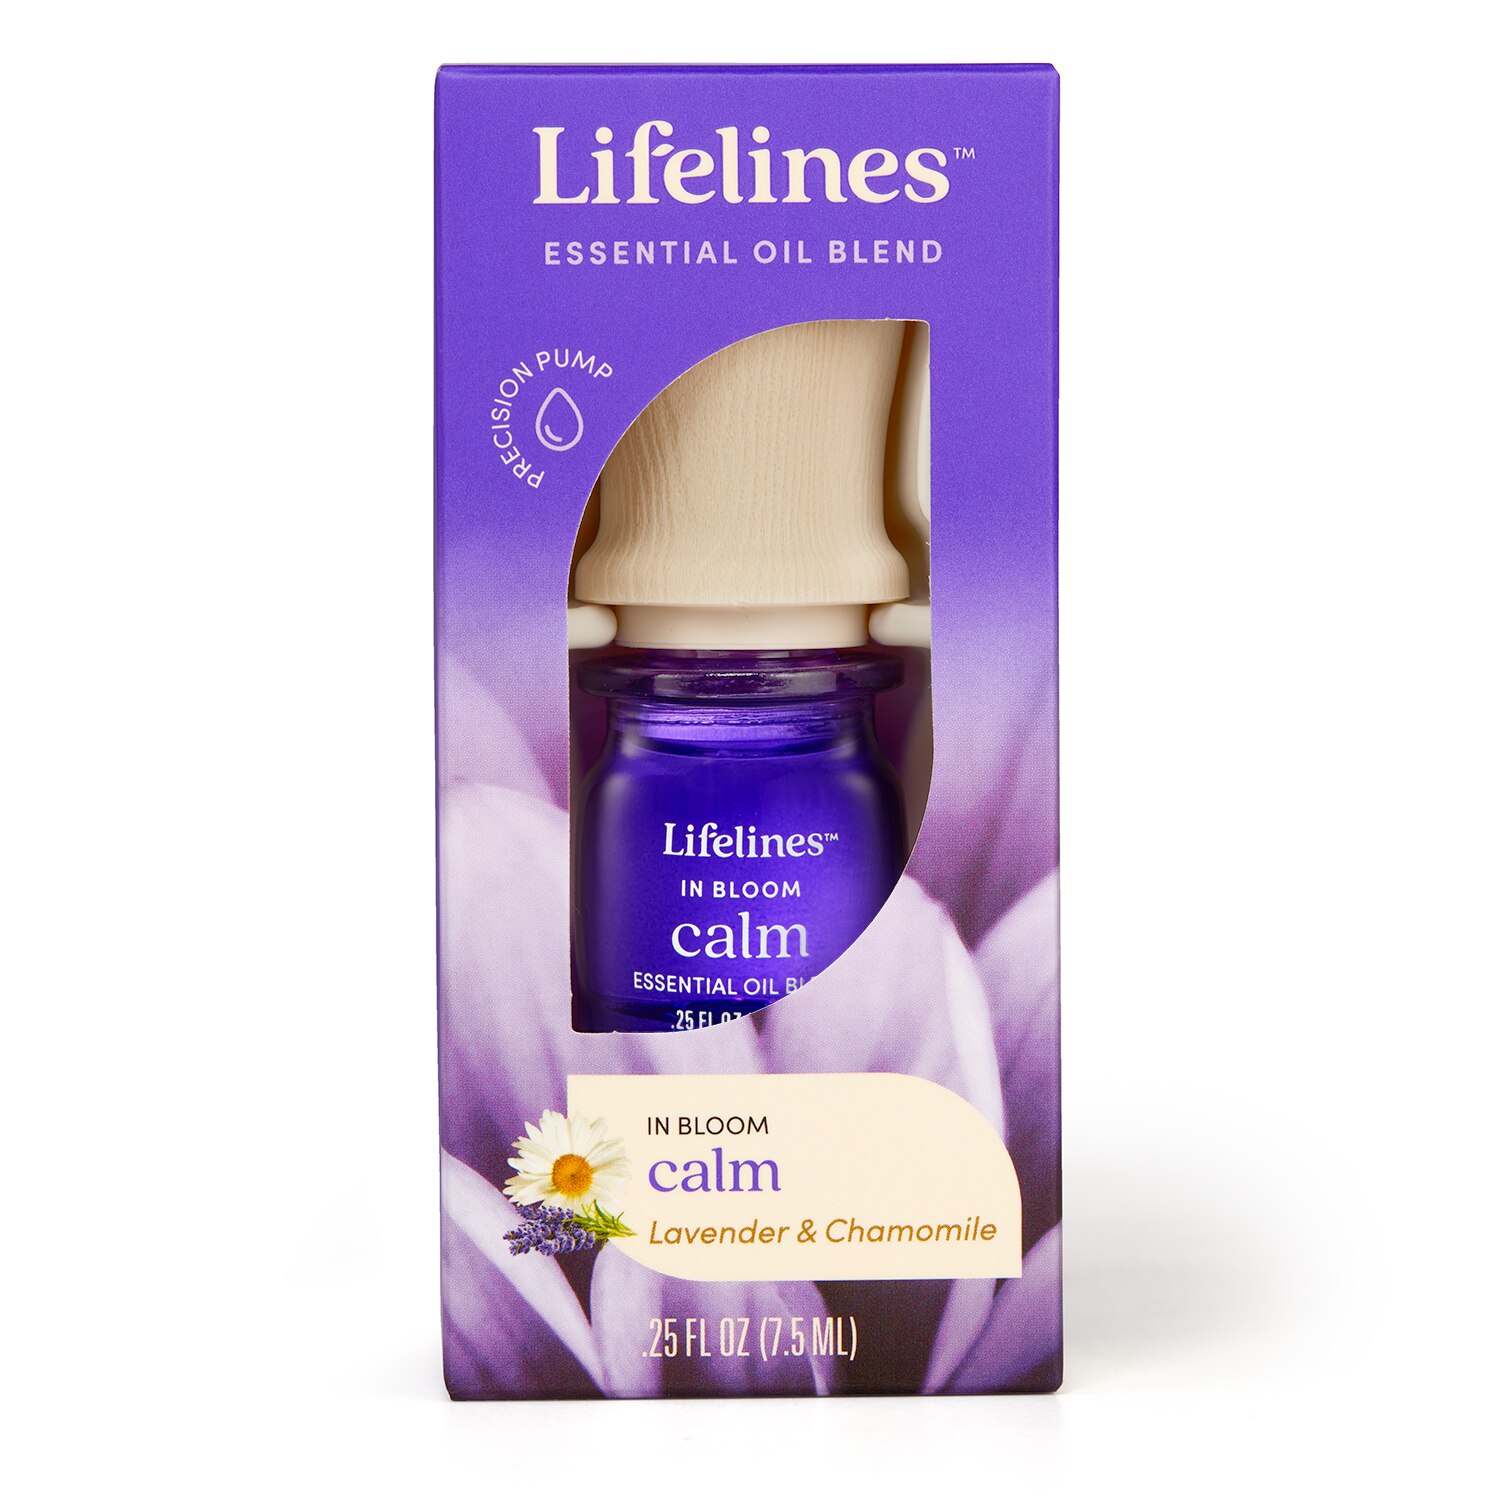 Lifelines Essential Oil Blend - In Bloom: Calm , CVS